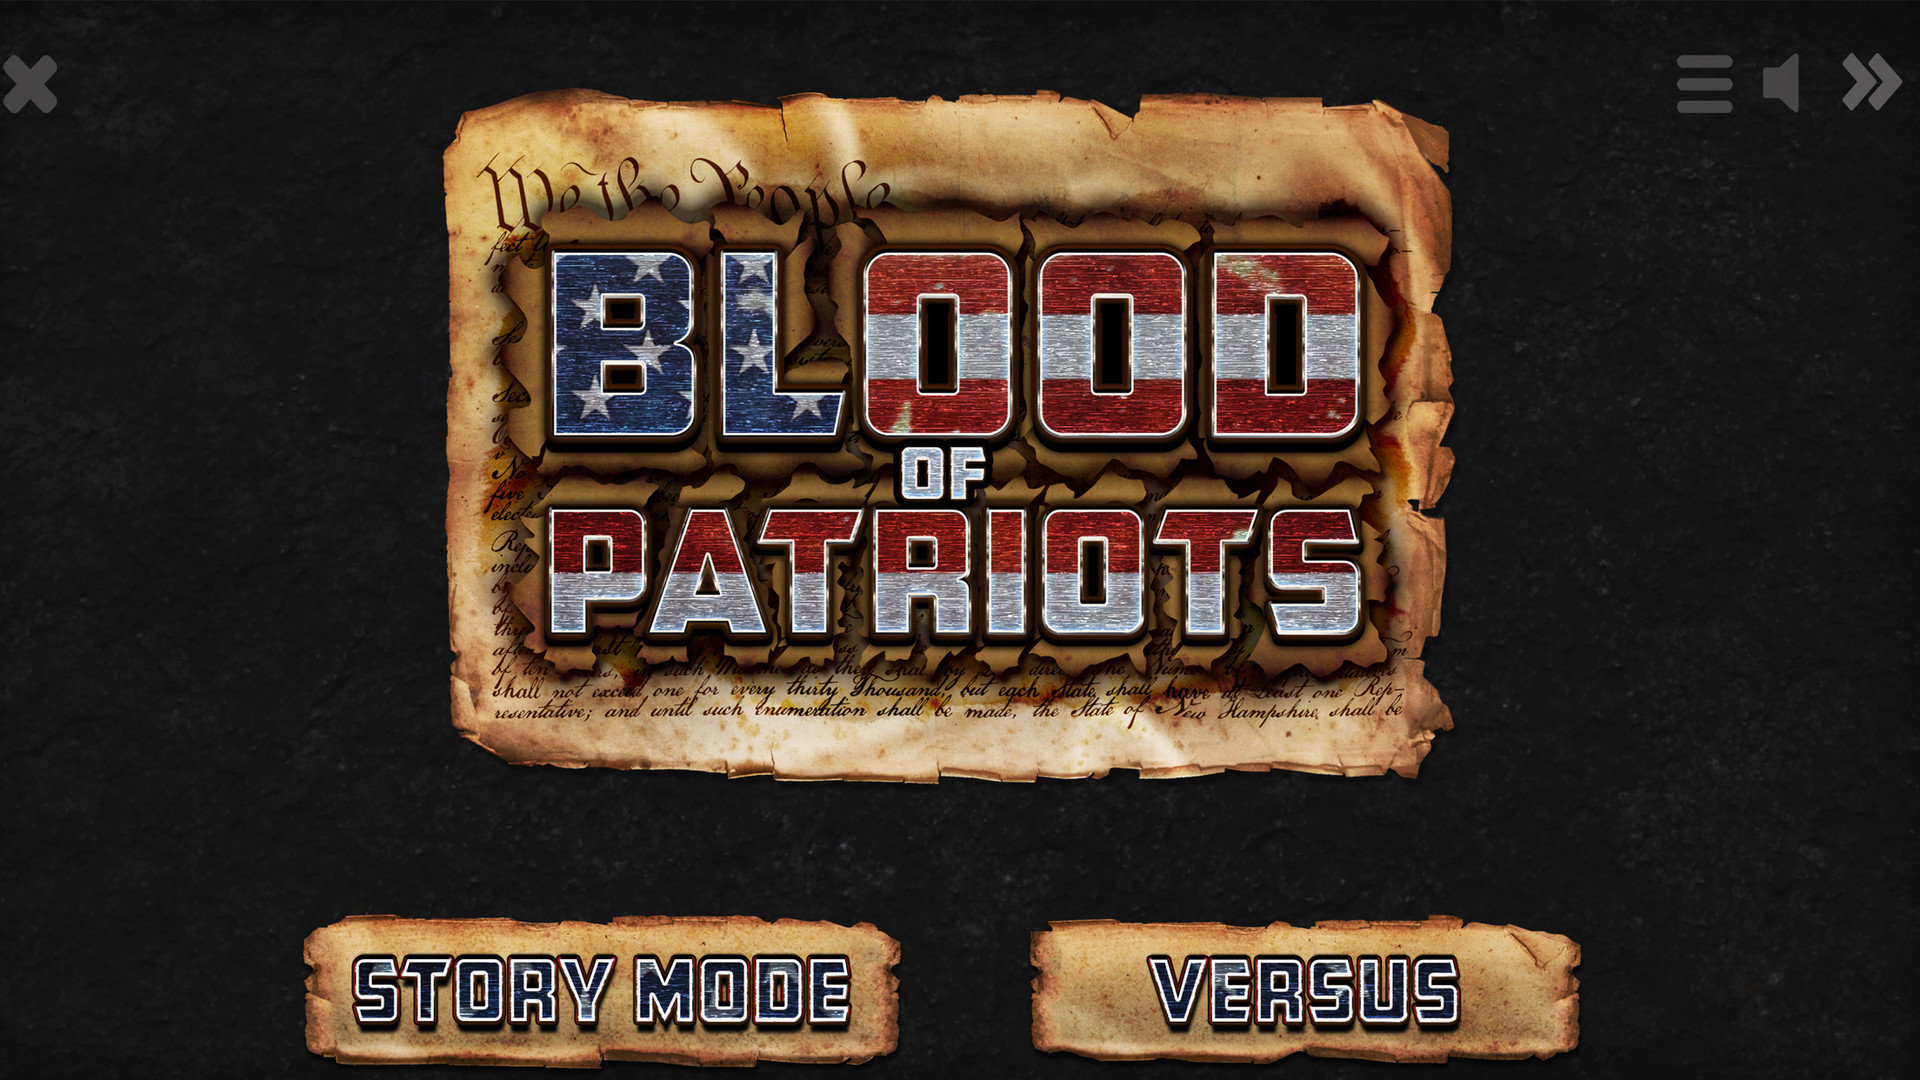 Blood Of Patriots Steam CD Key